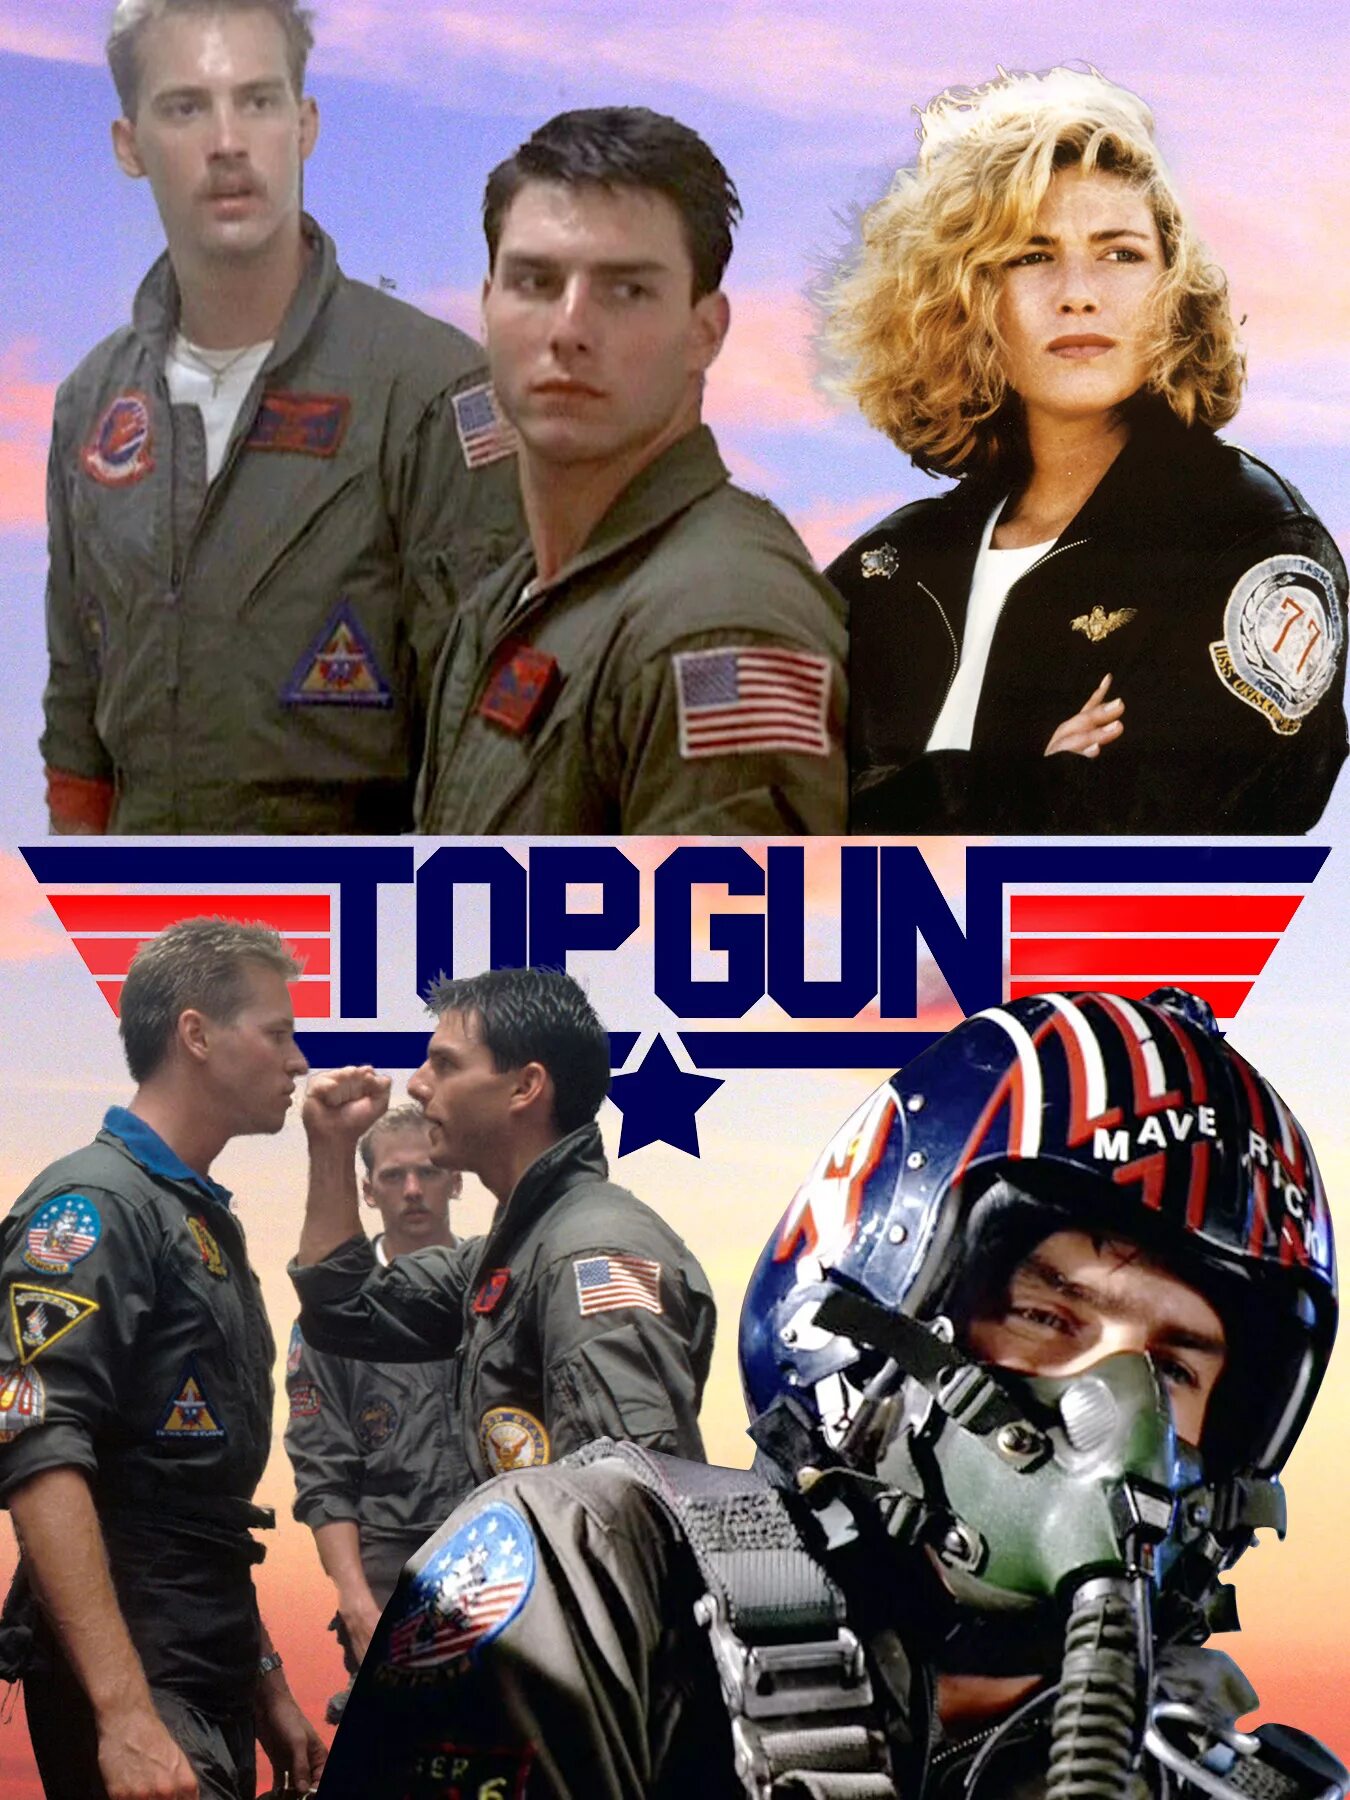 Top gun movie. Келли МАКГИЛЛИС лучший стрелок. Top Gun 1986 Постер. Топ Ган Постер.